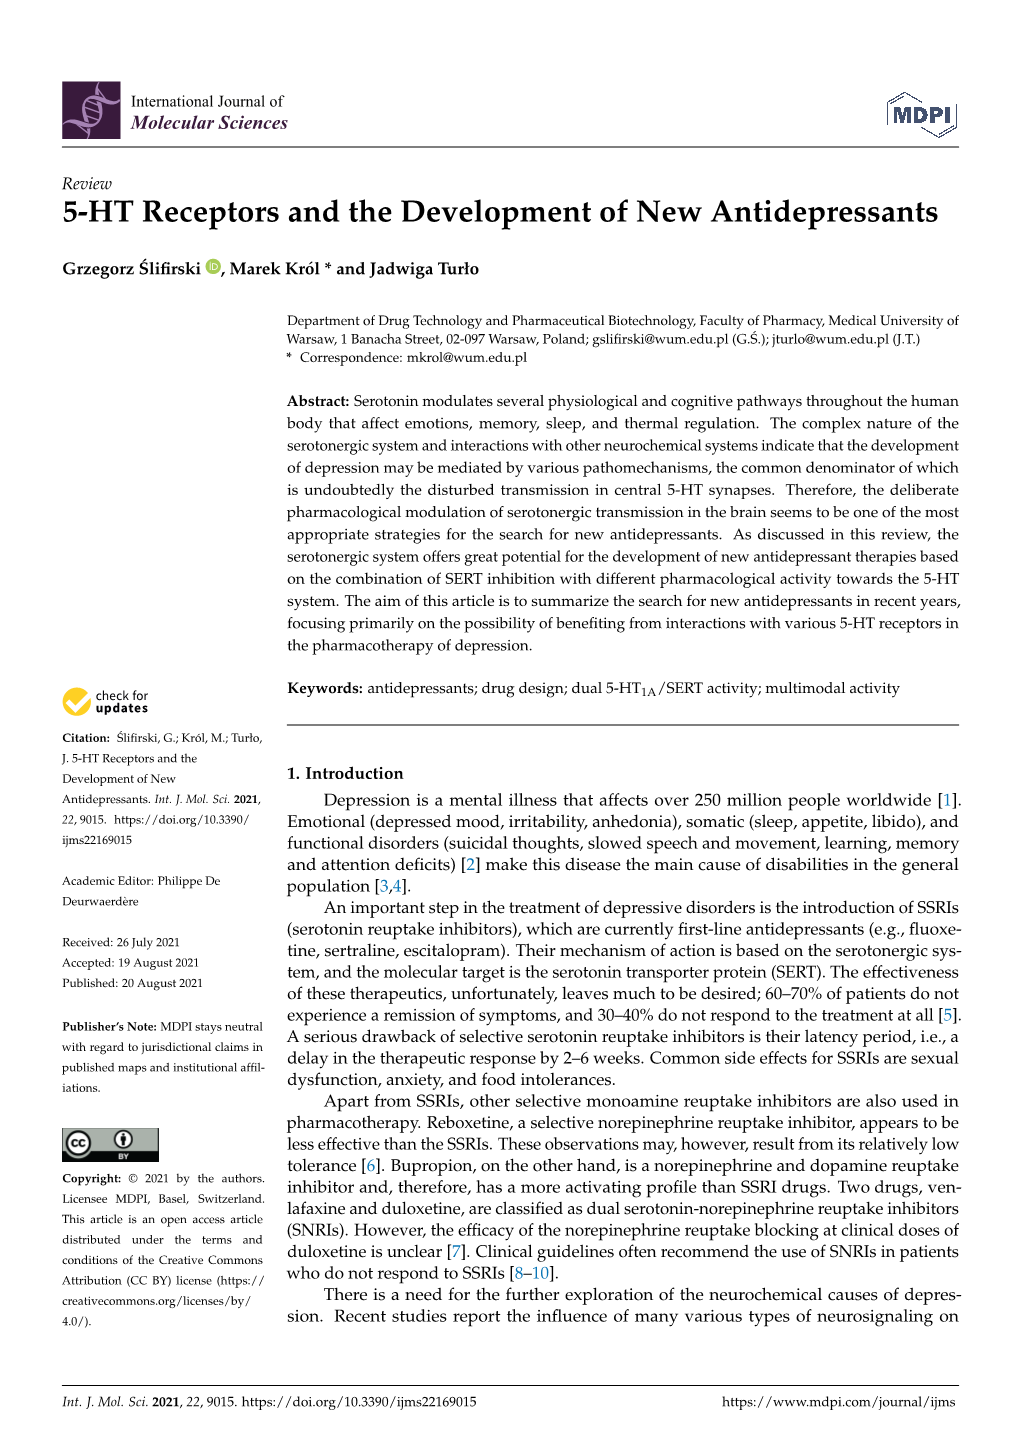 5-HT Receptors and the Development of New Antidepressants